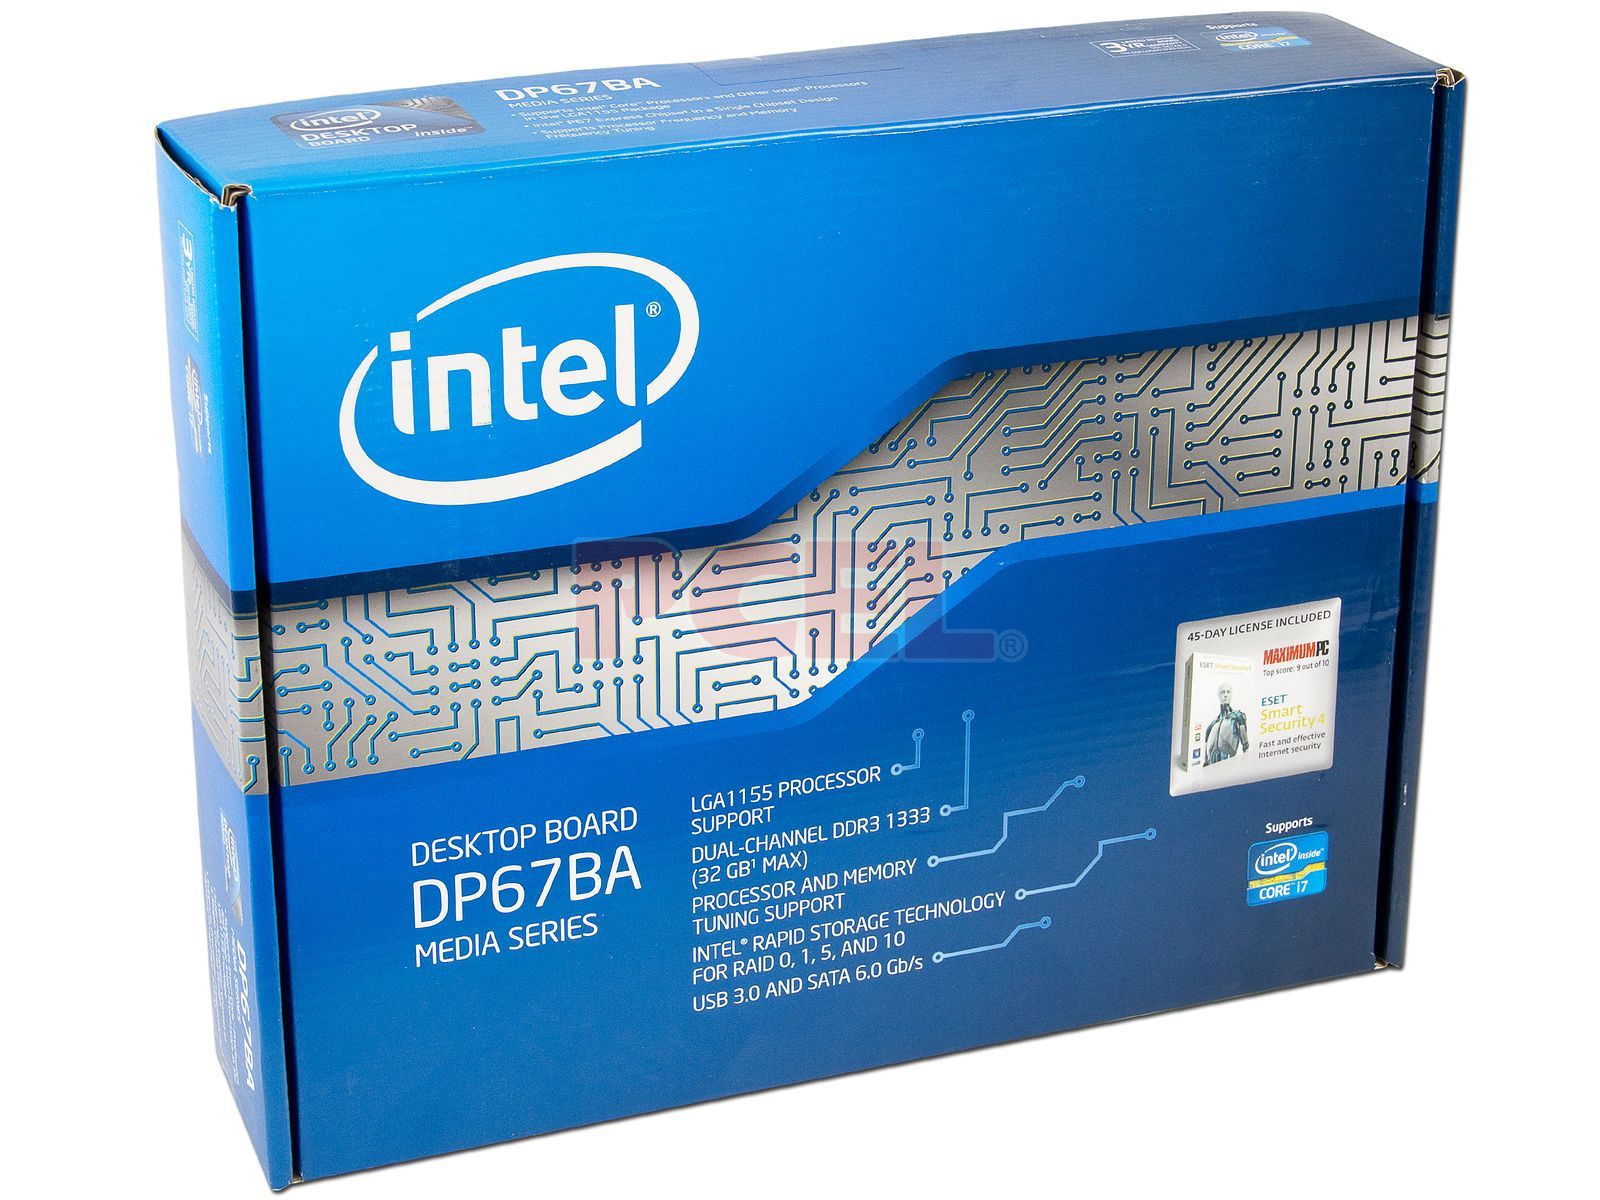 Placa base DDR3 dual, para Corei7, i5, i3 (para LGA1155) placa base de  computadora PCIE8X SATA3.0 SATA2.0x3 soporta ALC6625.1 Channel PC  Motherboard